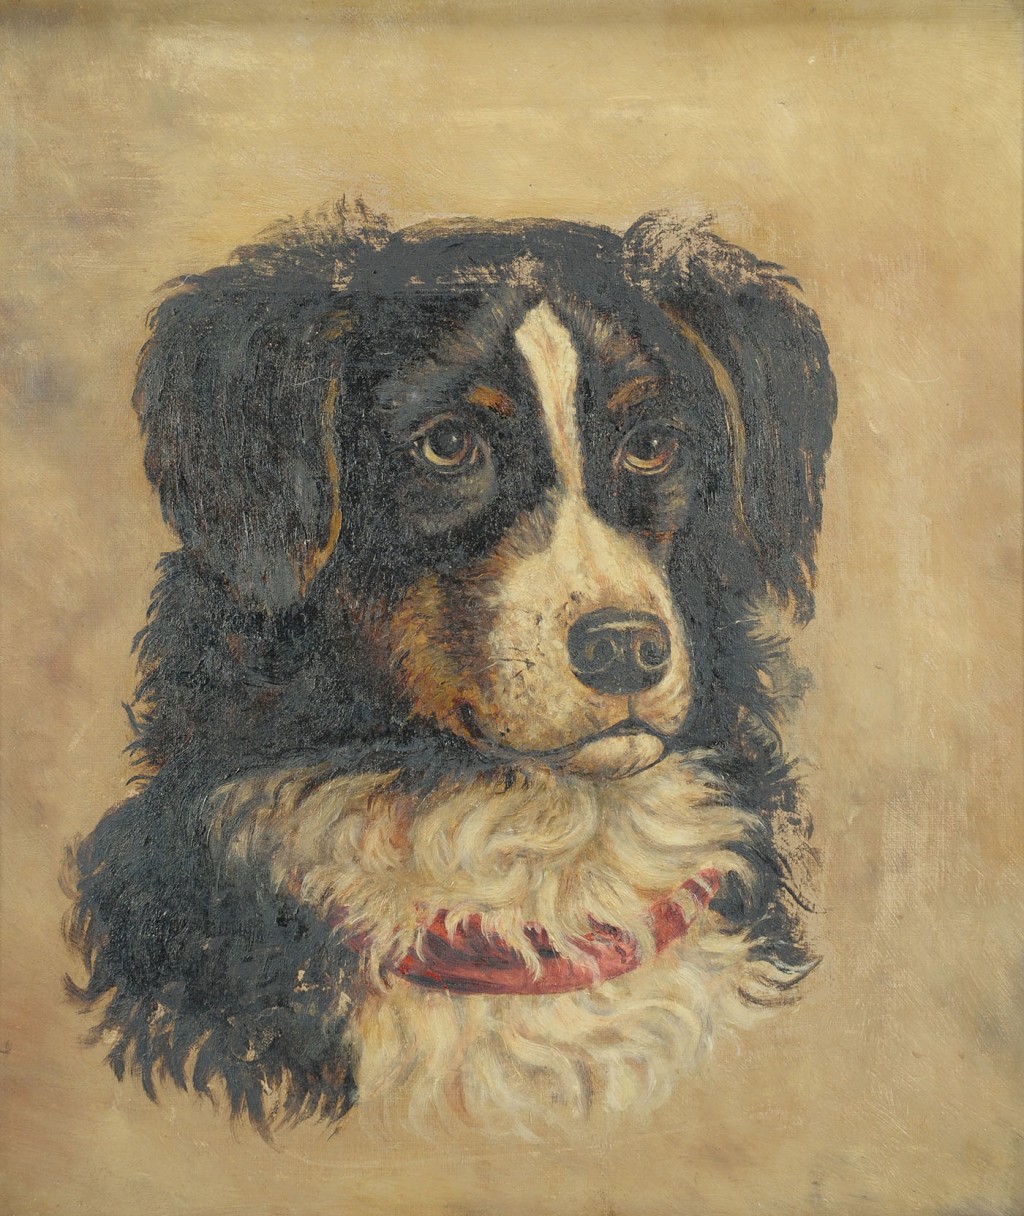 Lot 284: Folk Art Carved Dog Cane And Dog Painting